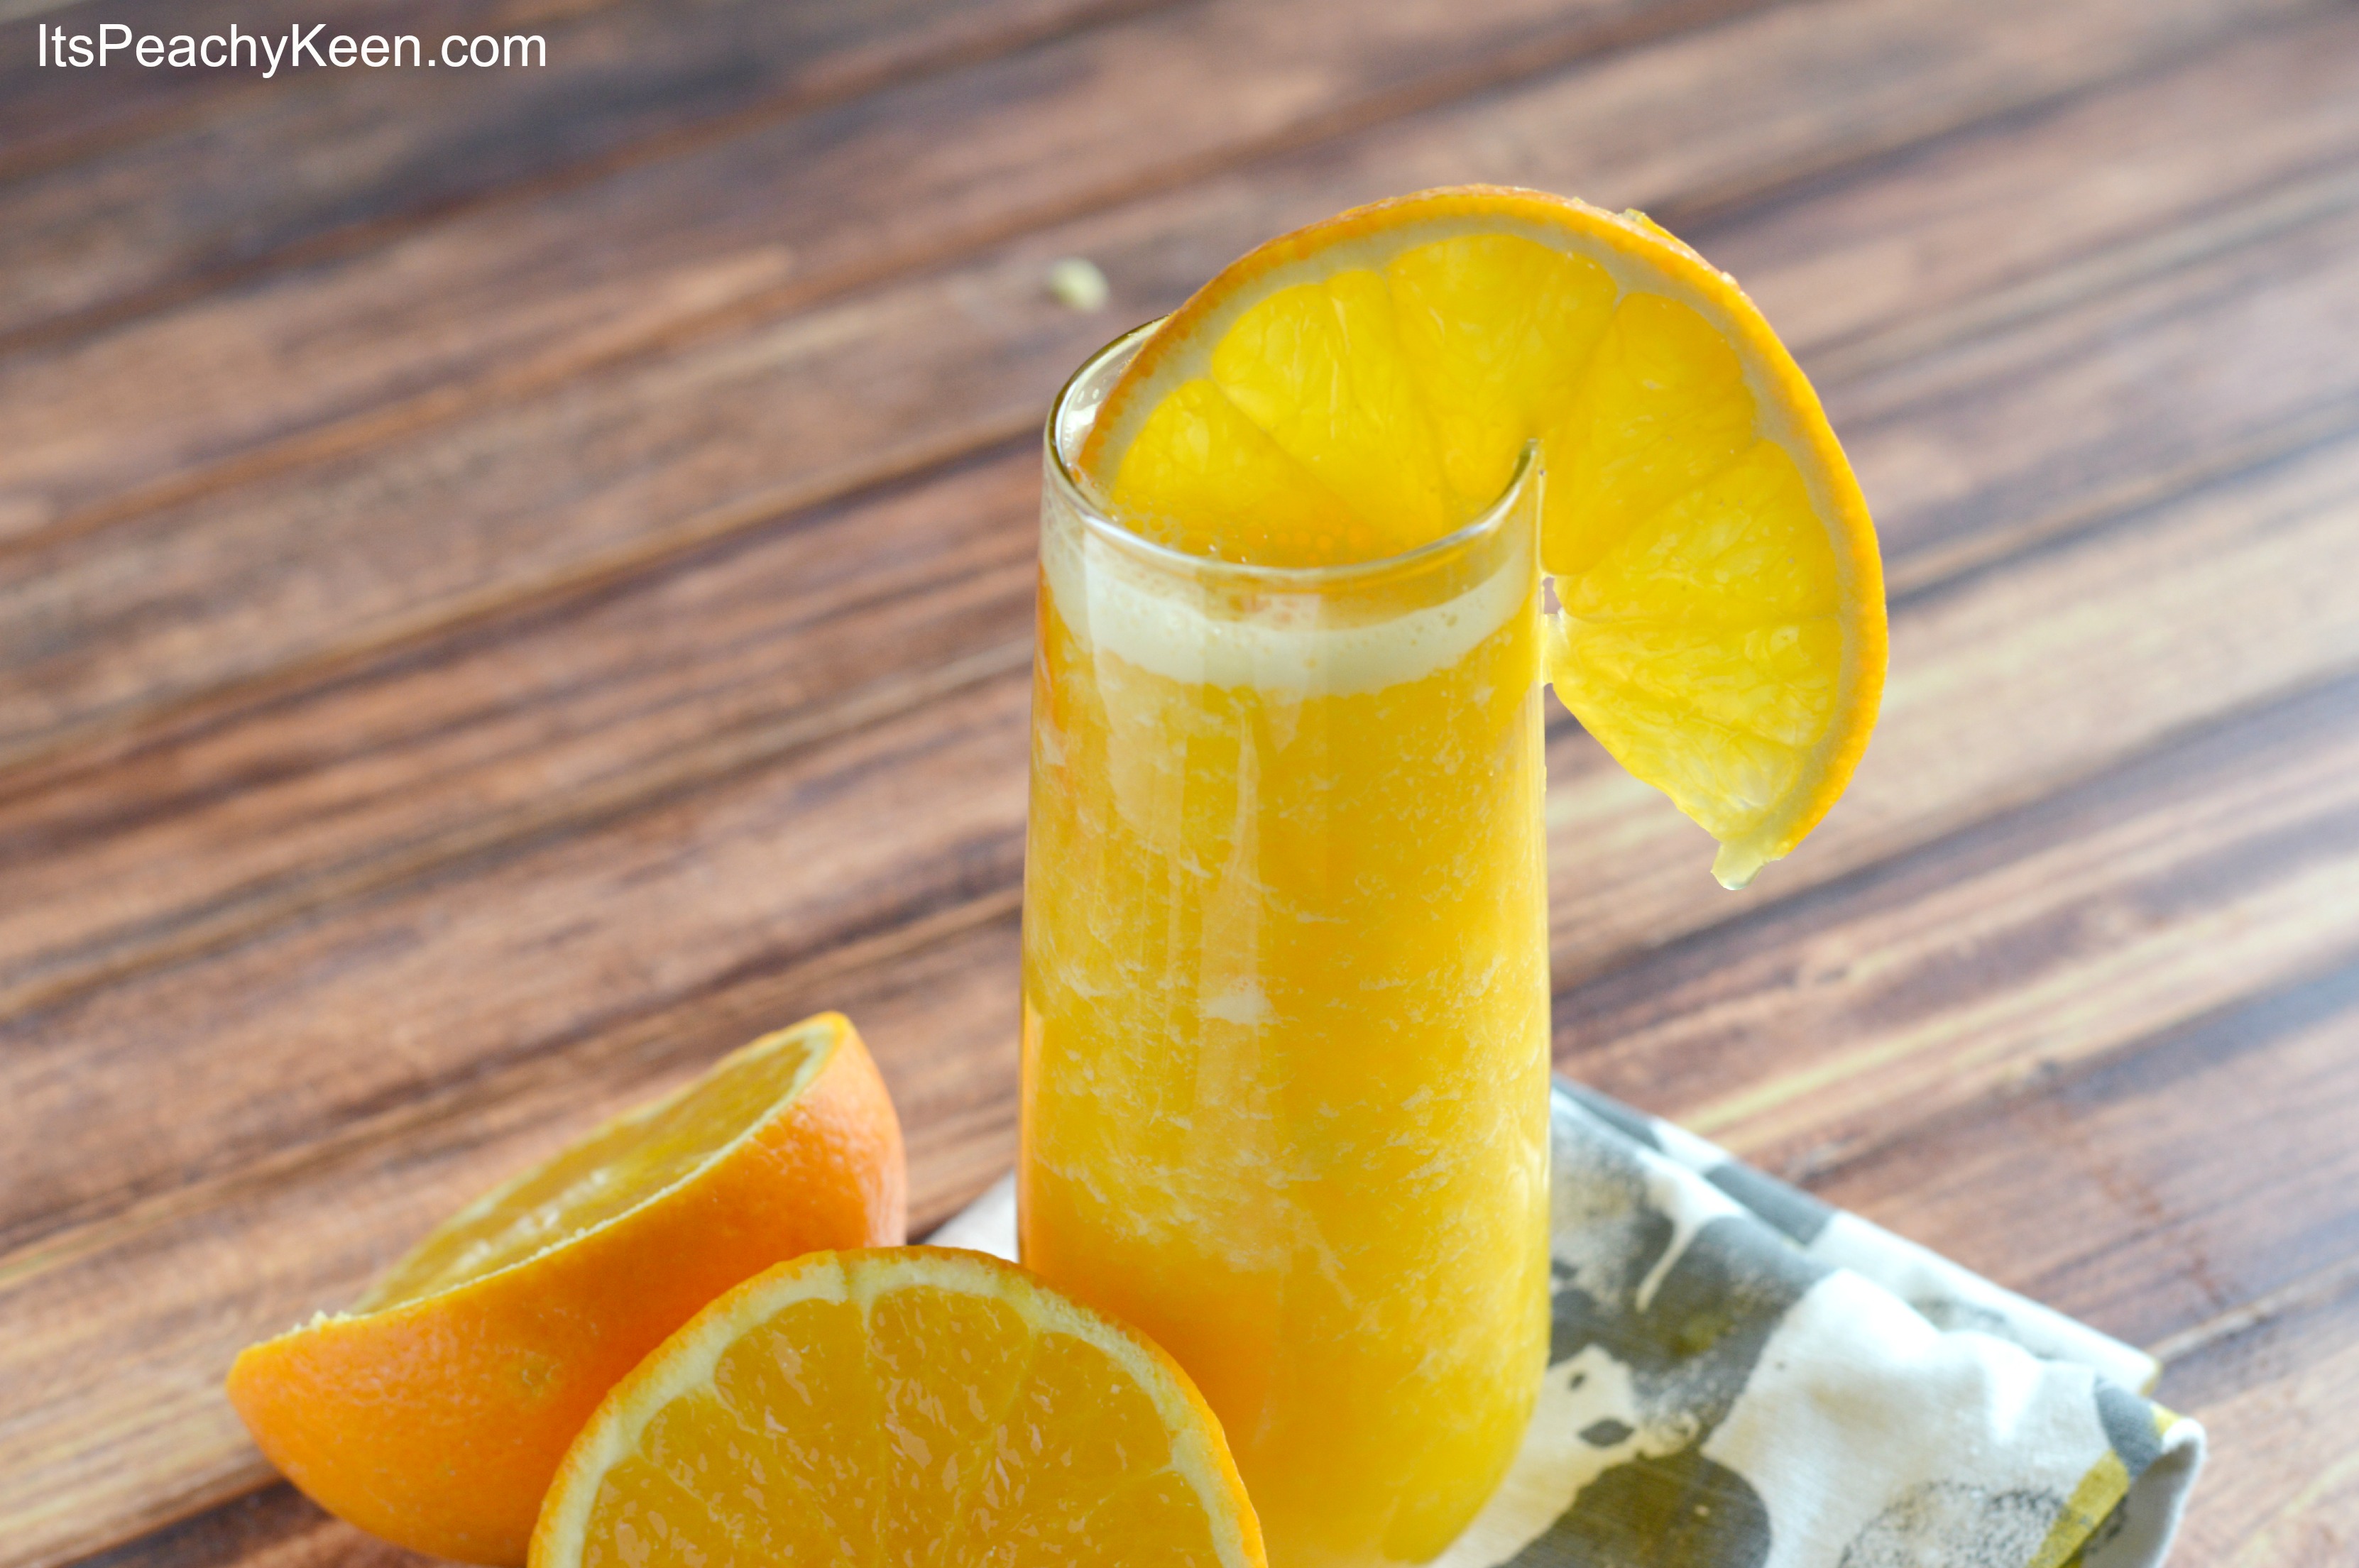 Homemade Orange Juice - It's Peachy Keen